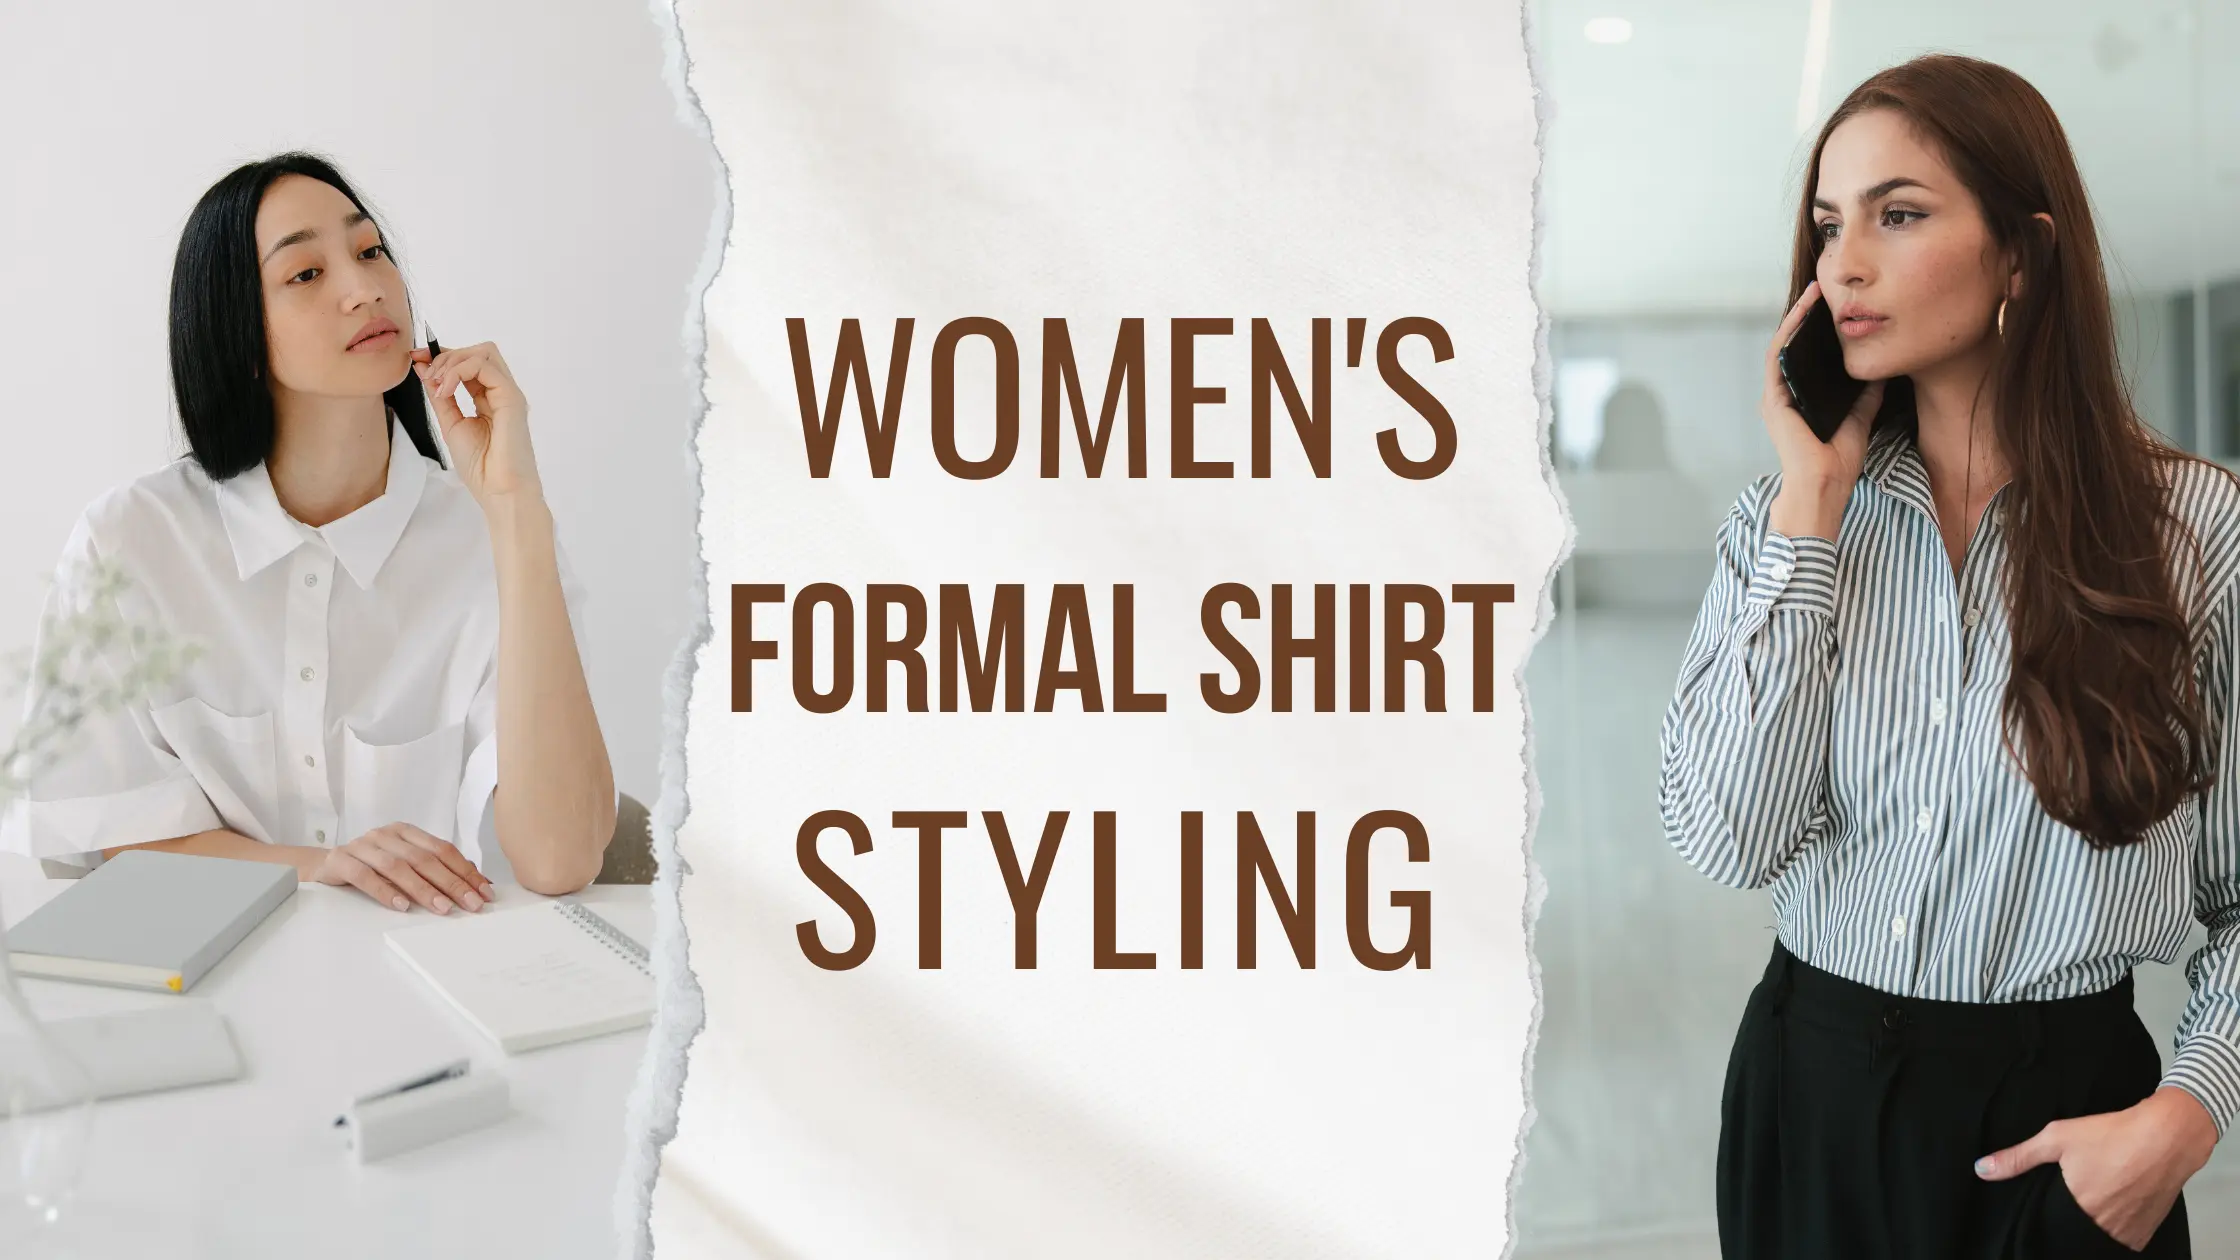 Women's formal shirt styling.